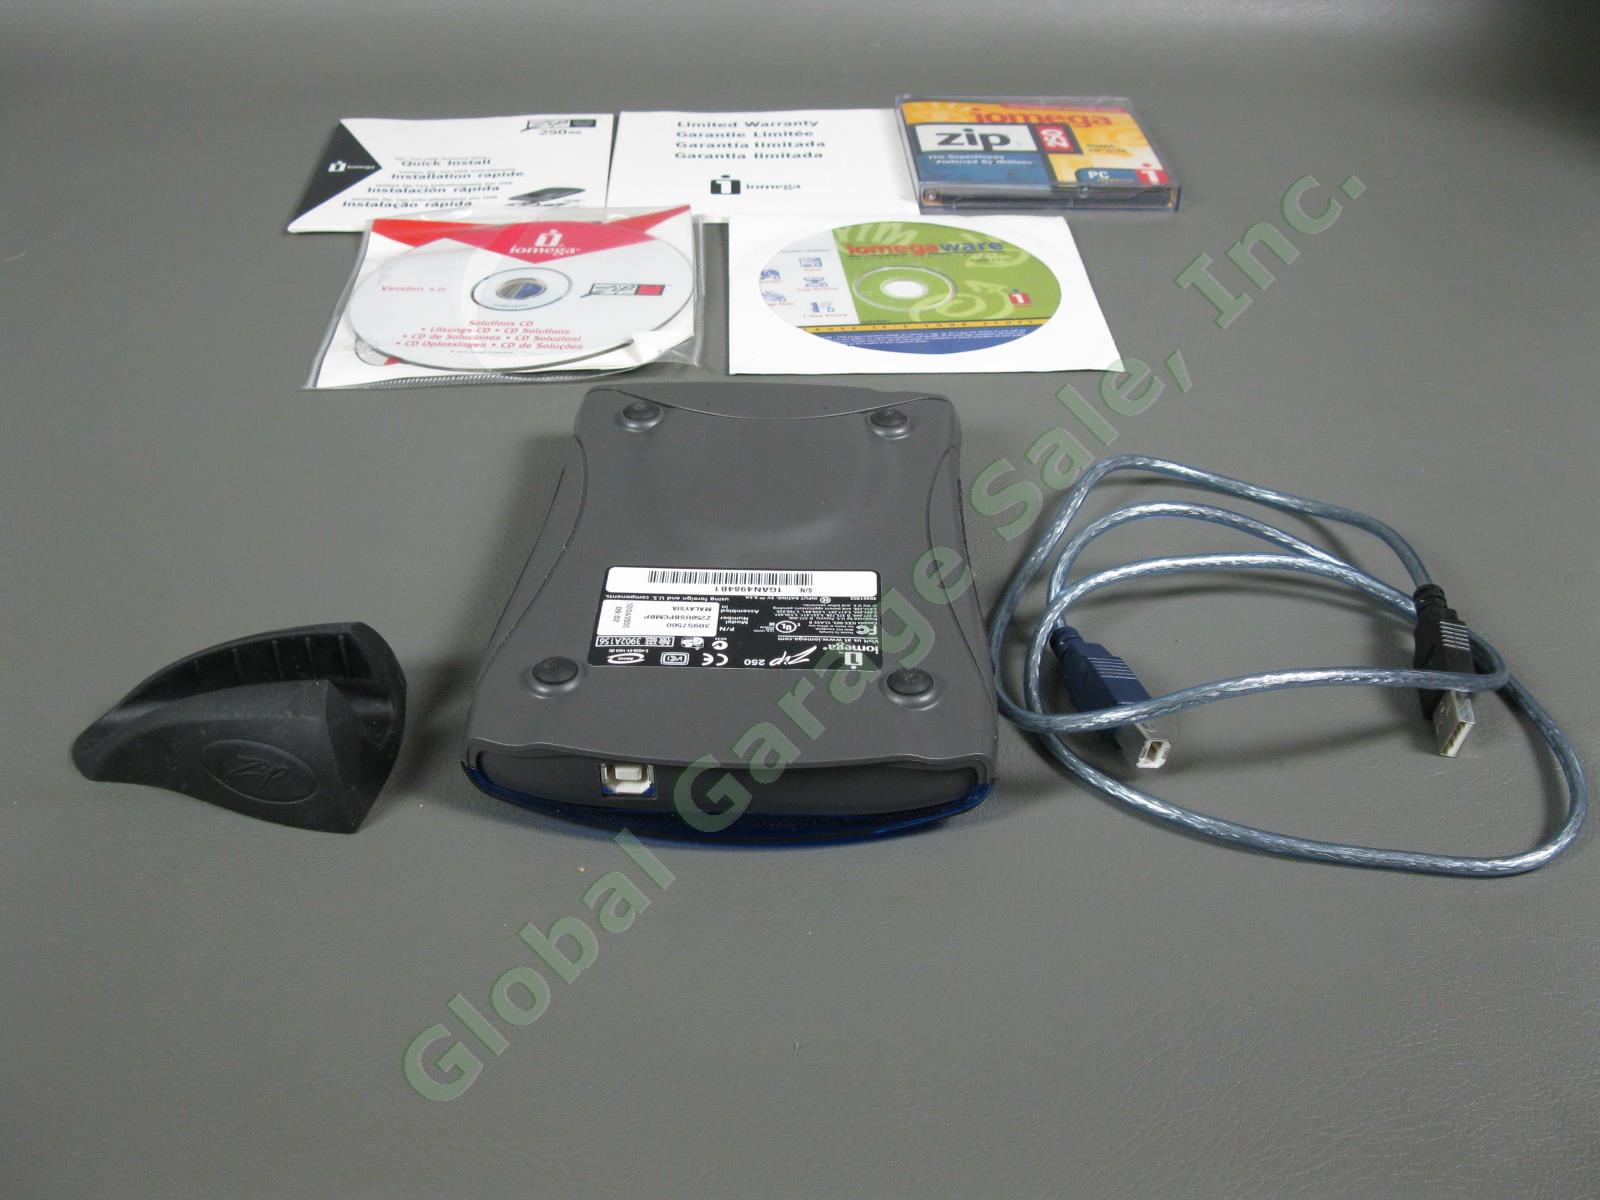 Iomega Zip 250 MB External Drive USB Powered Software Guide Disk Z250USBPCMBP NR 3